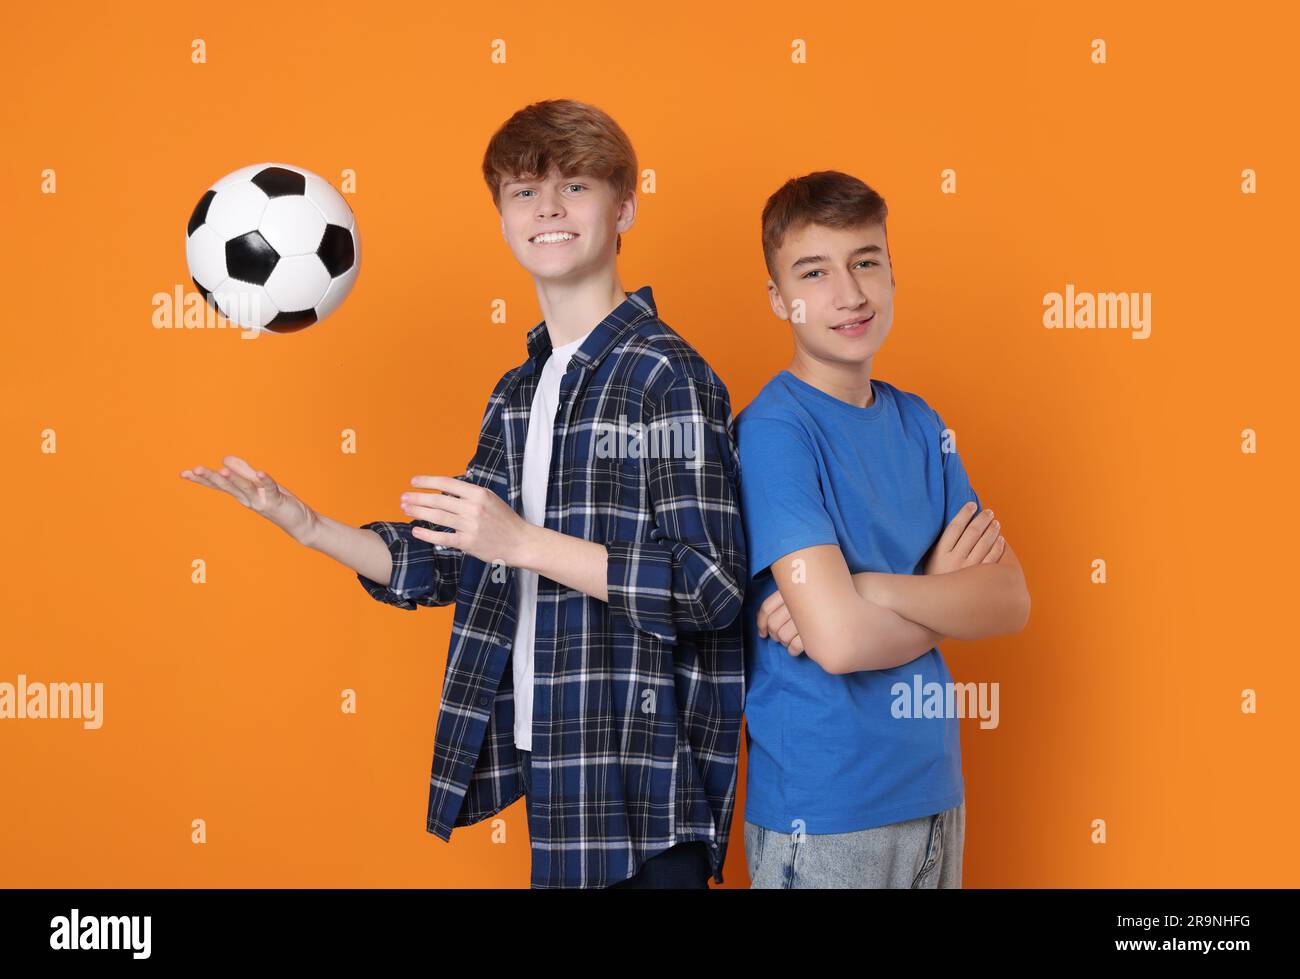 Happy teenage boys with soccer ball on orange background Stock Photo